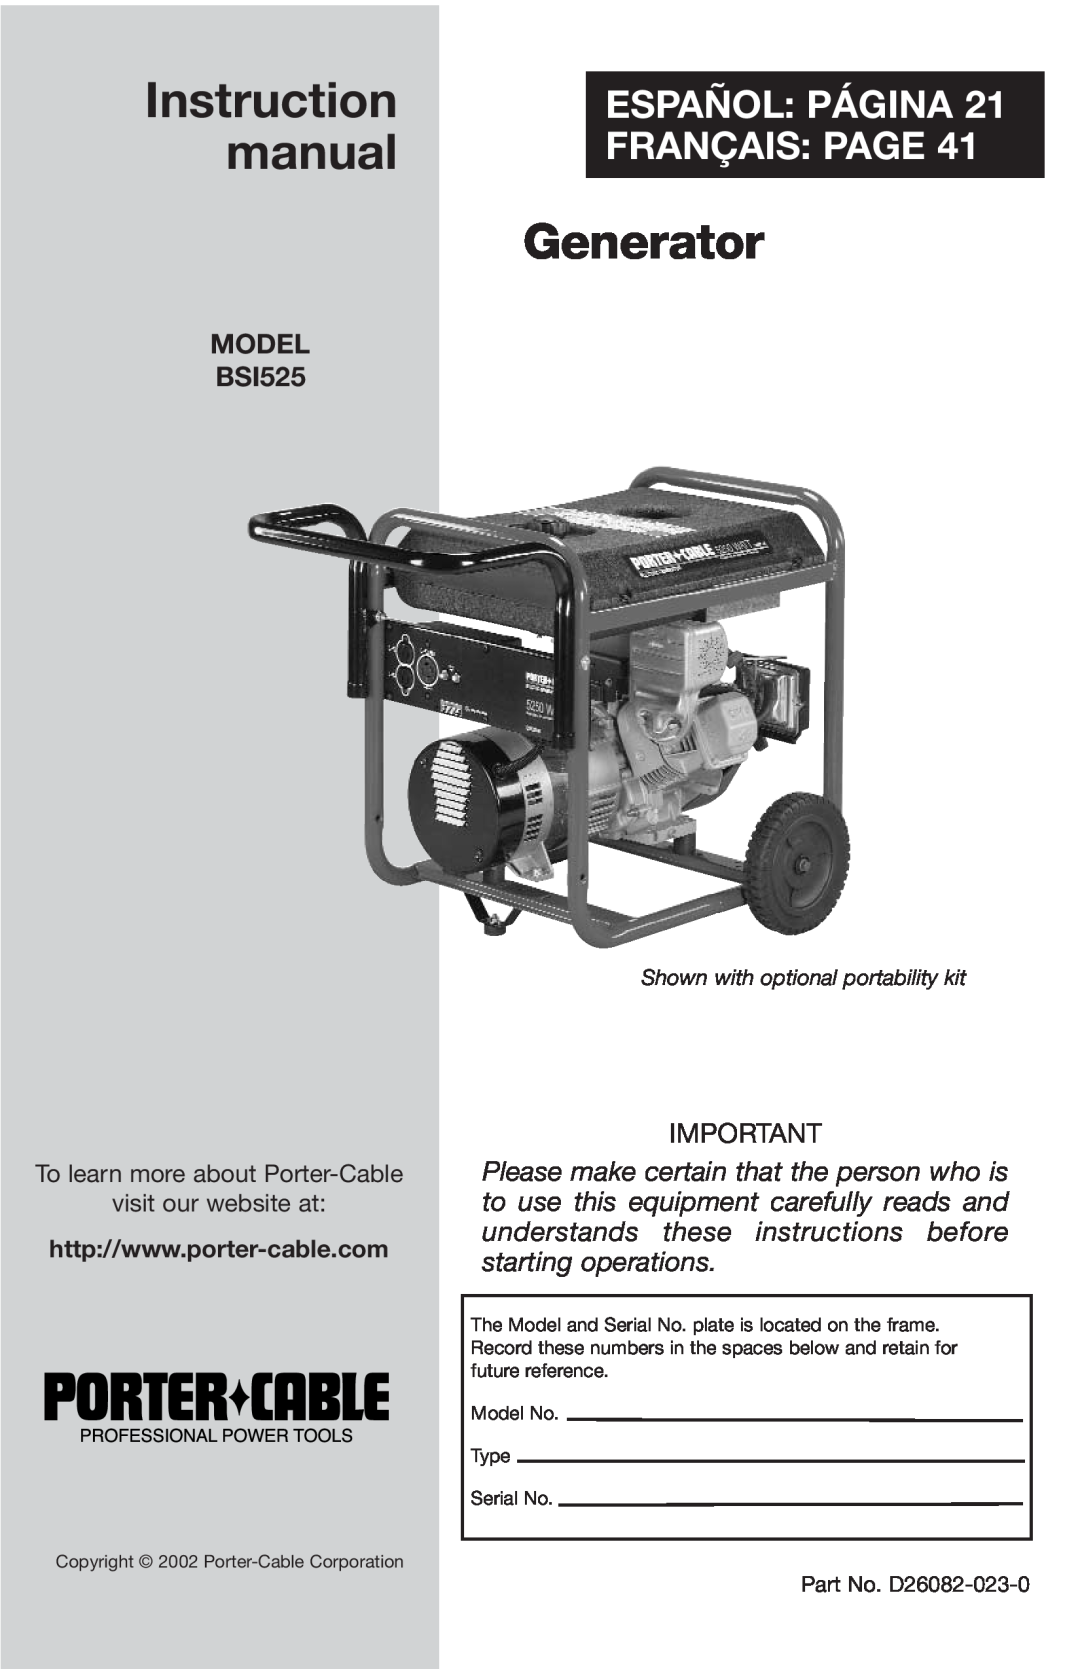 Porter-Cable instruction manual MODEL BSI525, Generator, Español Página Français Page 